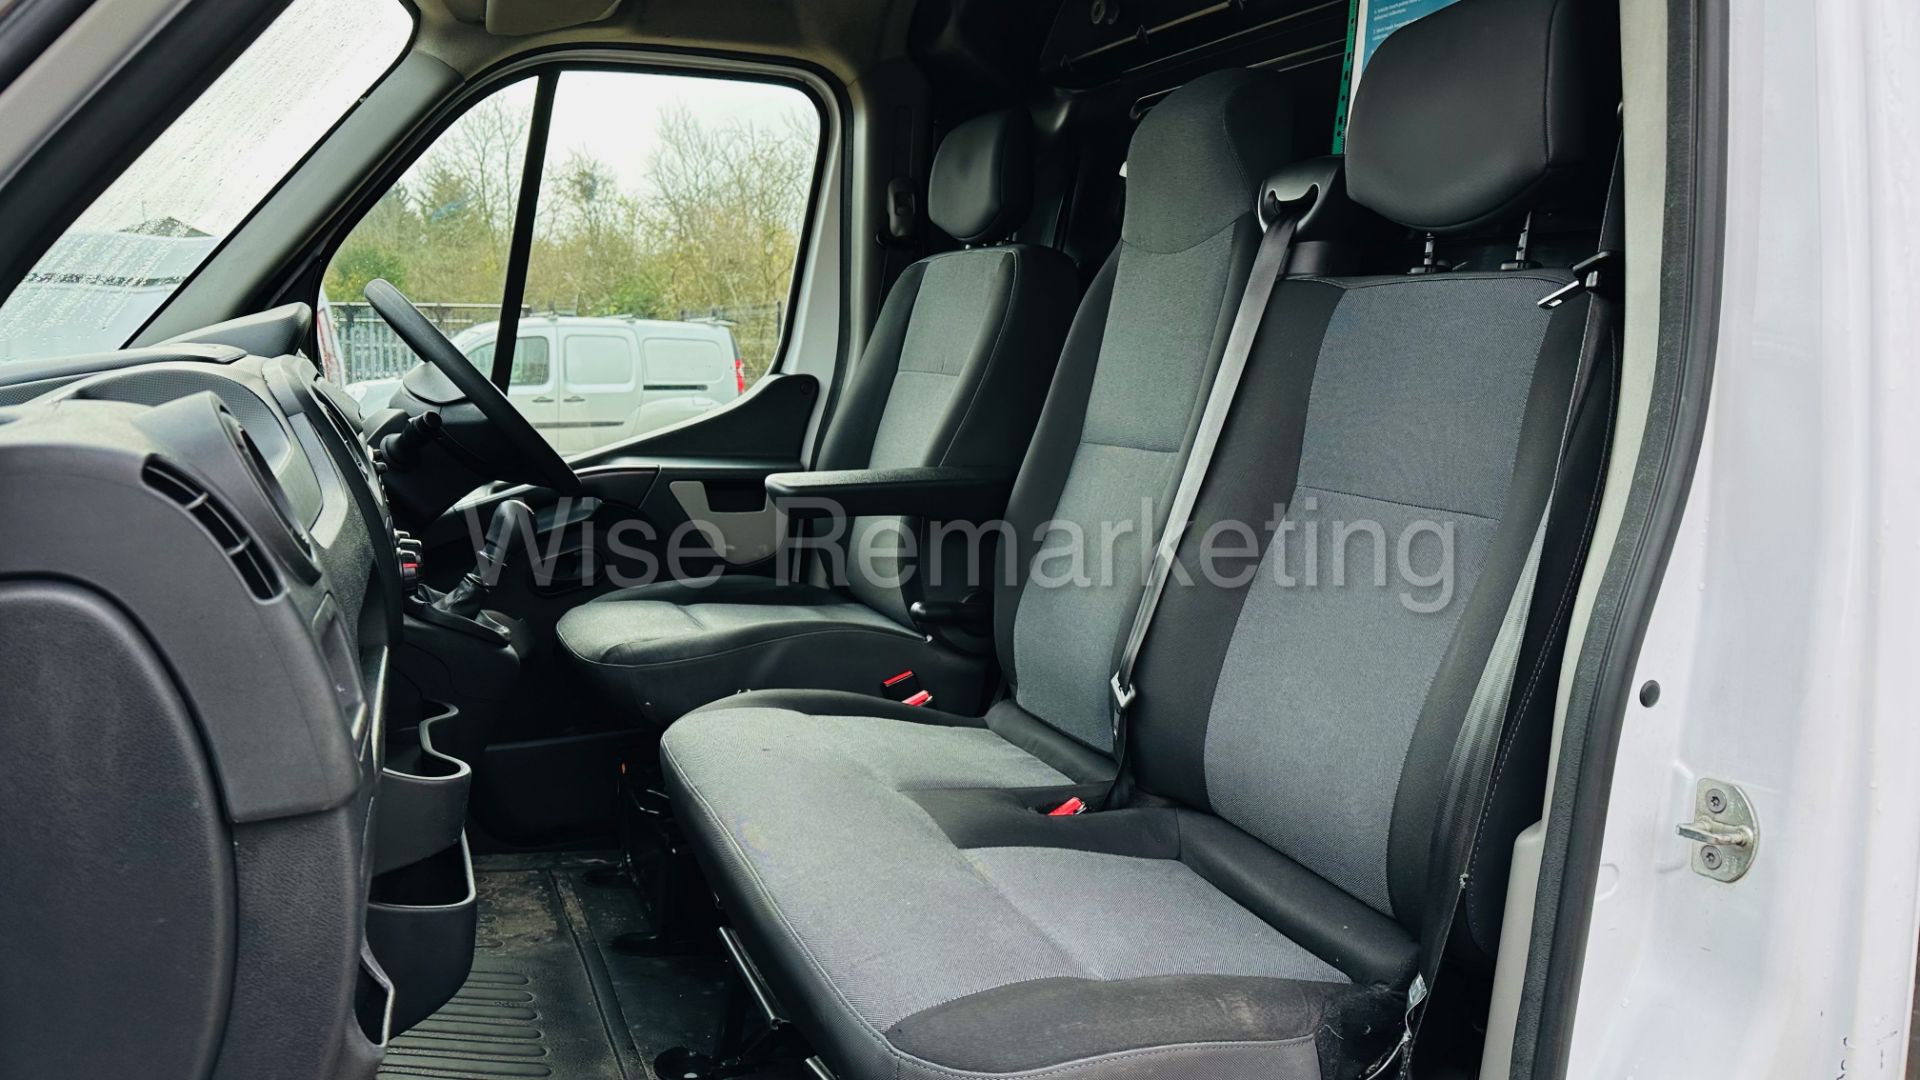 Renault Master 2.3 Dci *LWB Low Loader / Luton Box* (2019) Euro 6 / U-LEZ Compliant (3500 kg) *A/C* - Image 21 of 34